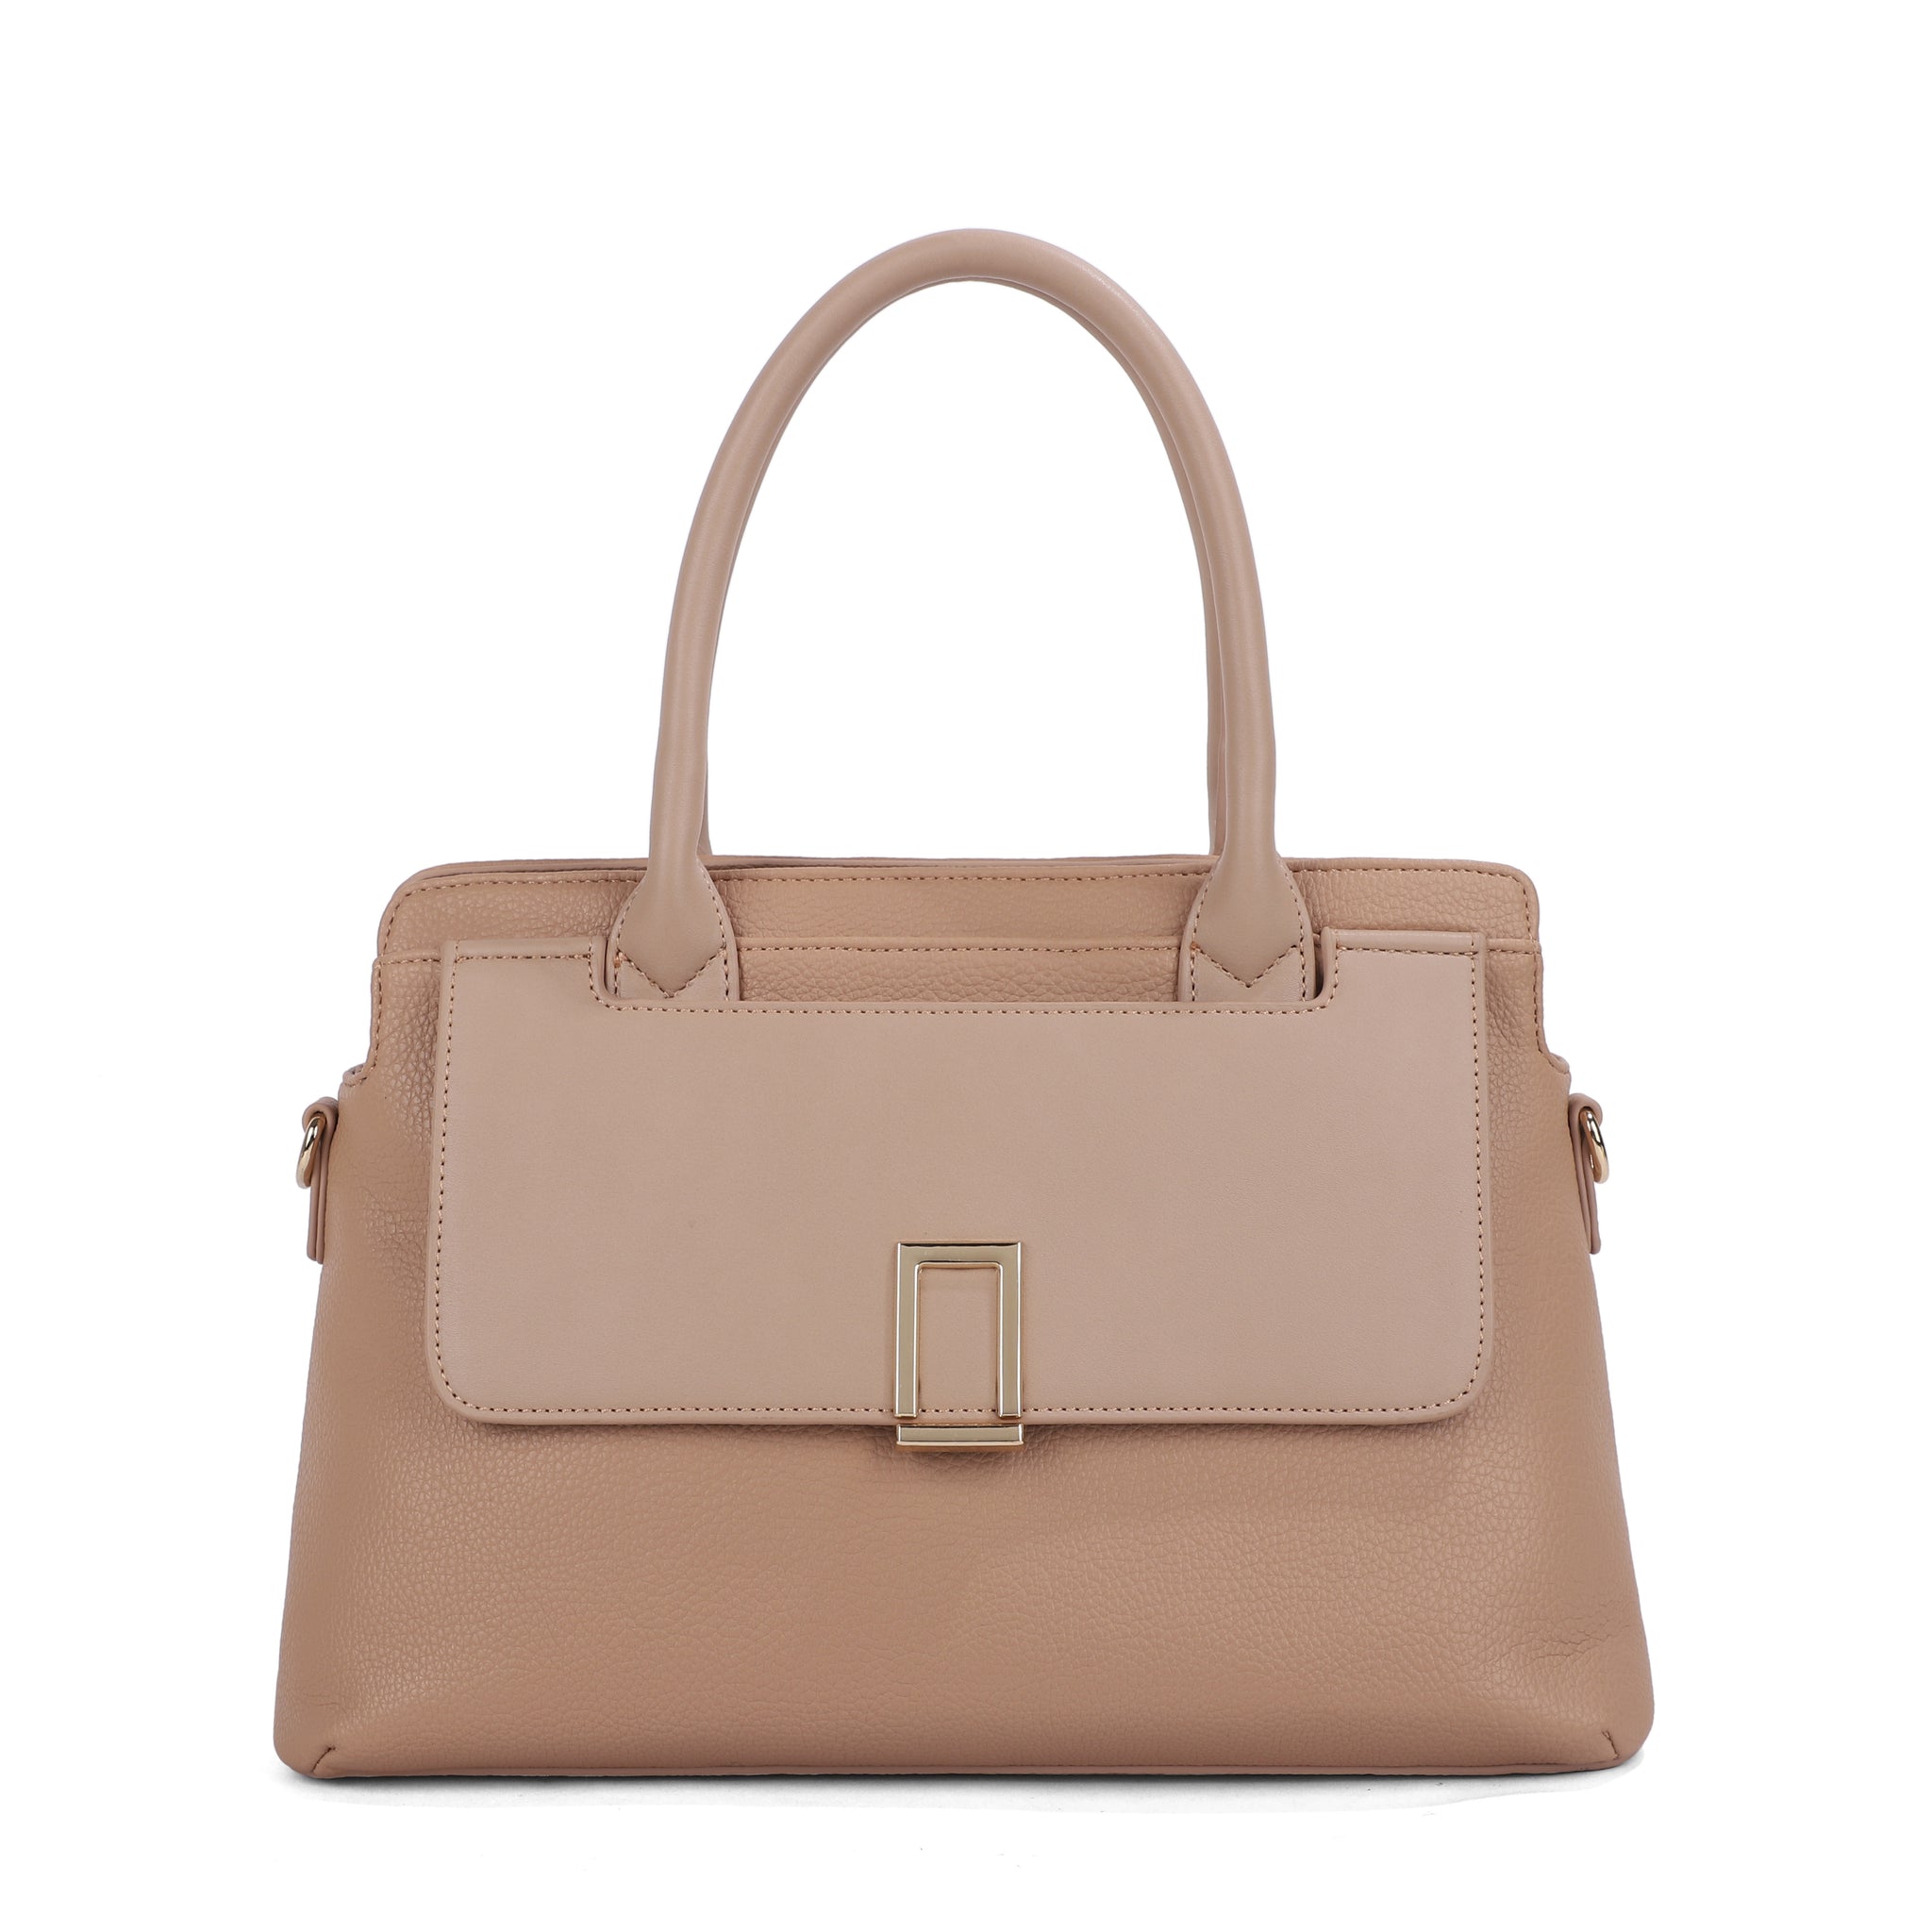 CQ1095 Top quality tote shoulder bags ladies gold-toned hardware flap hand bag trending handbags for women